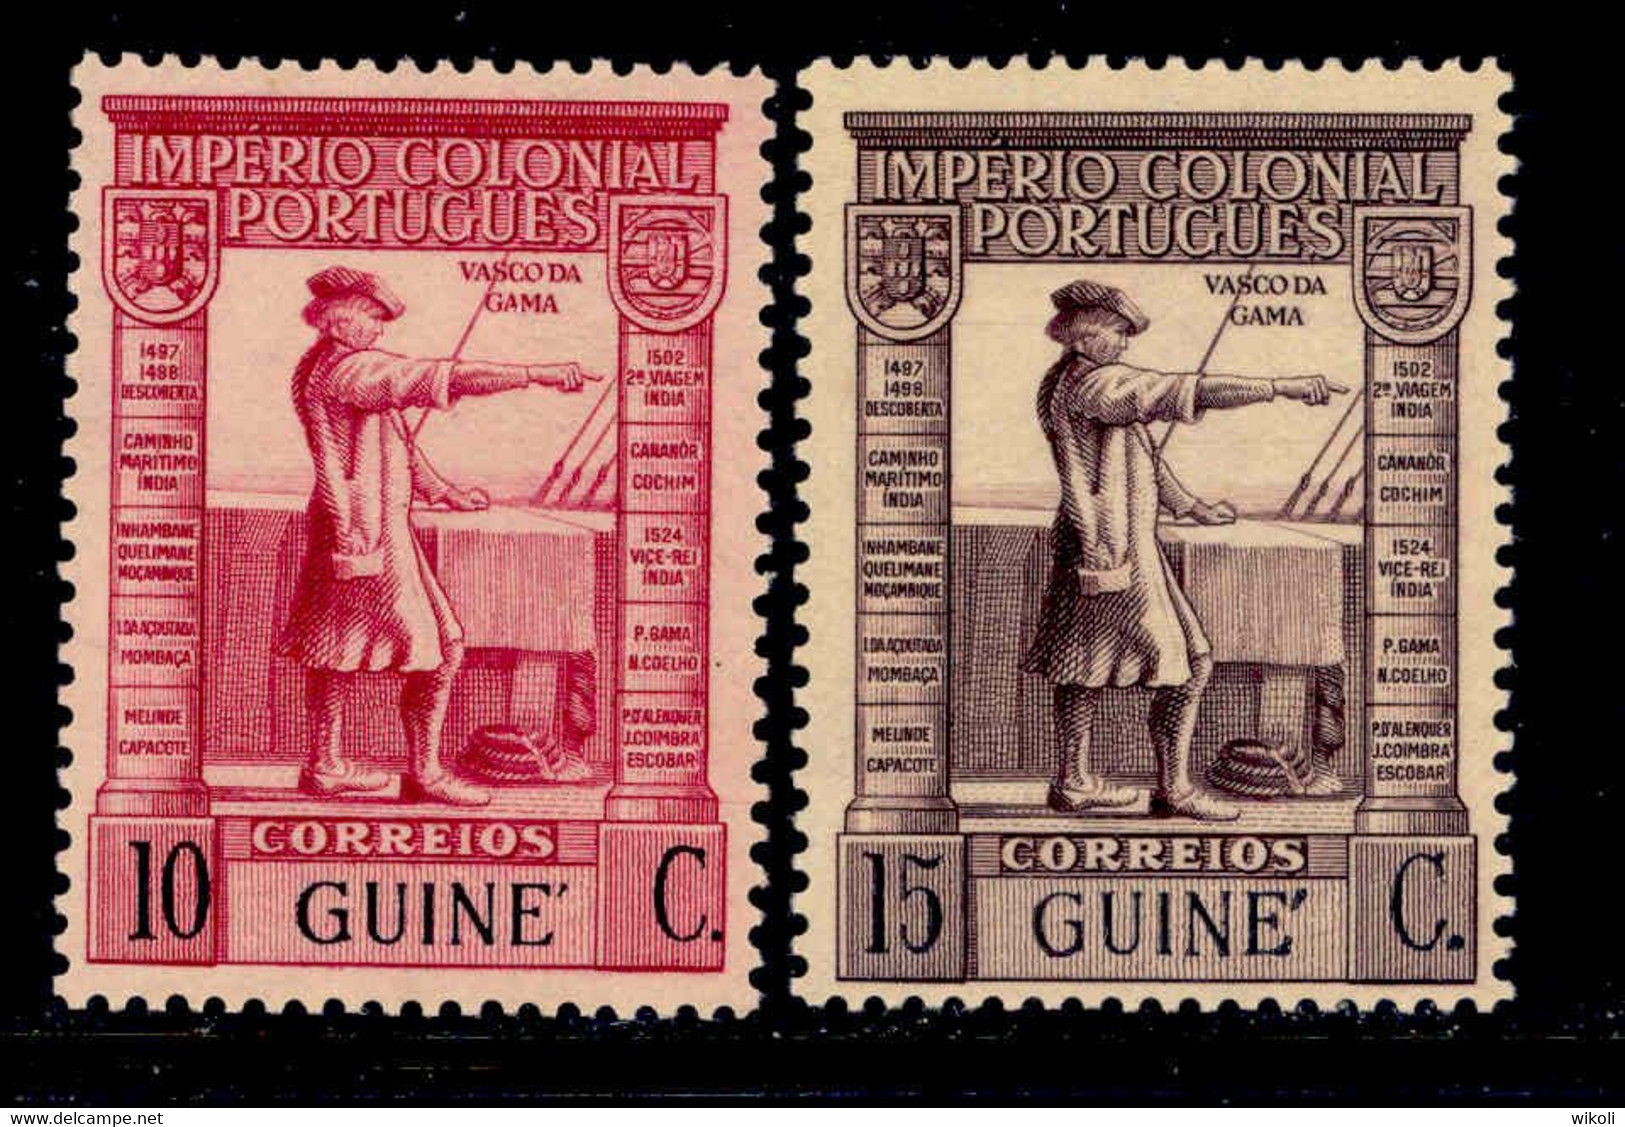 ! ! Portuguese Guinea - 1938 Imperio Vasco Gama 10 & 15 C - Af. 225 & 226 - MH - Portugiesisch-Guinea